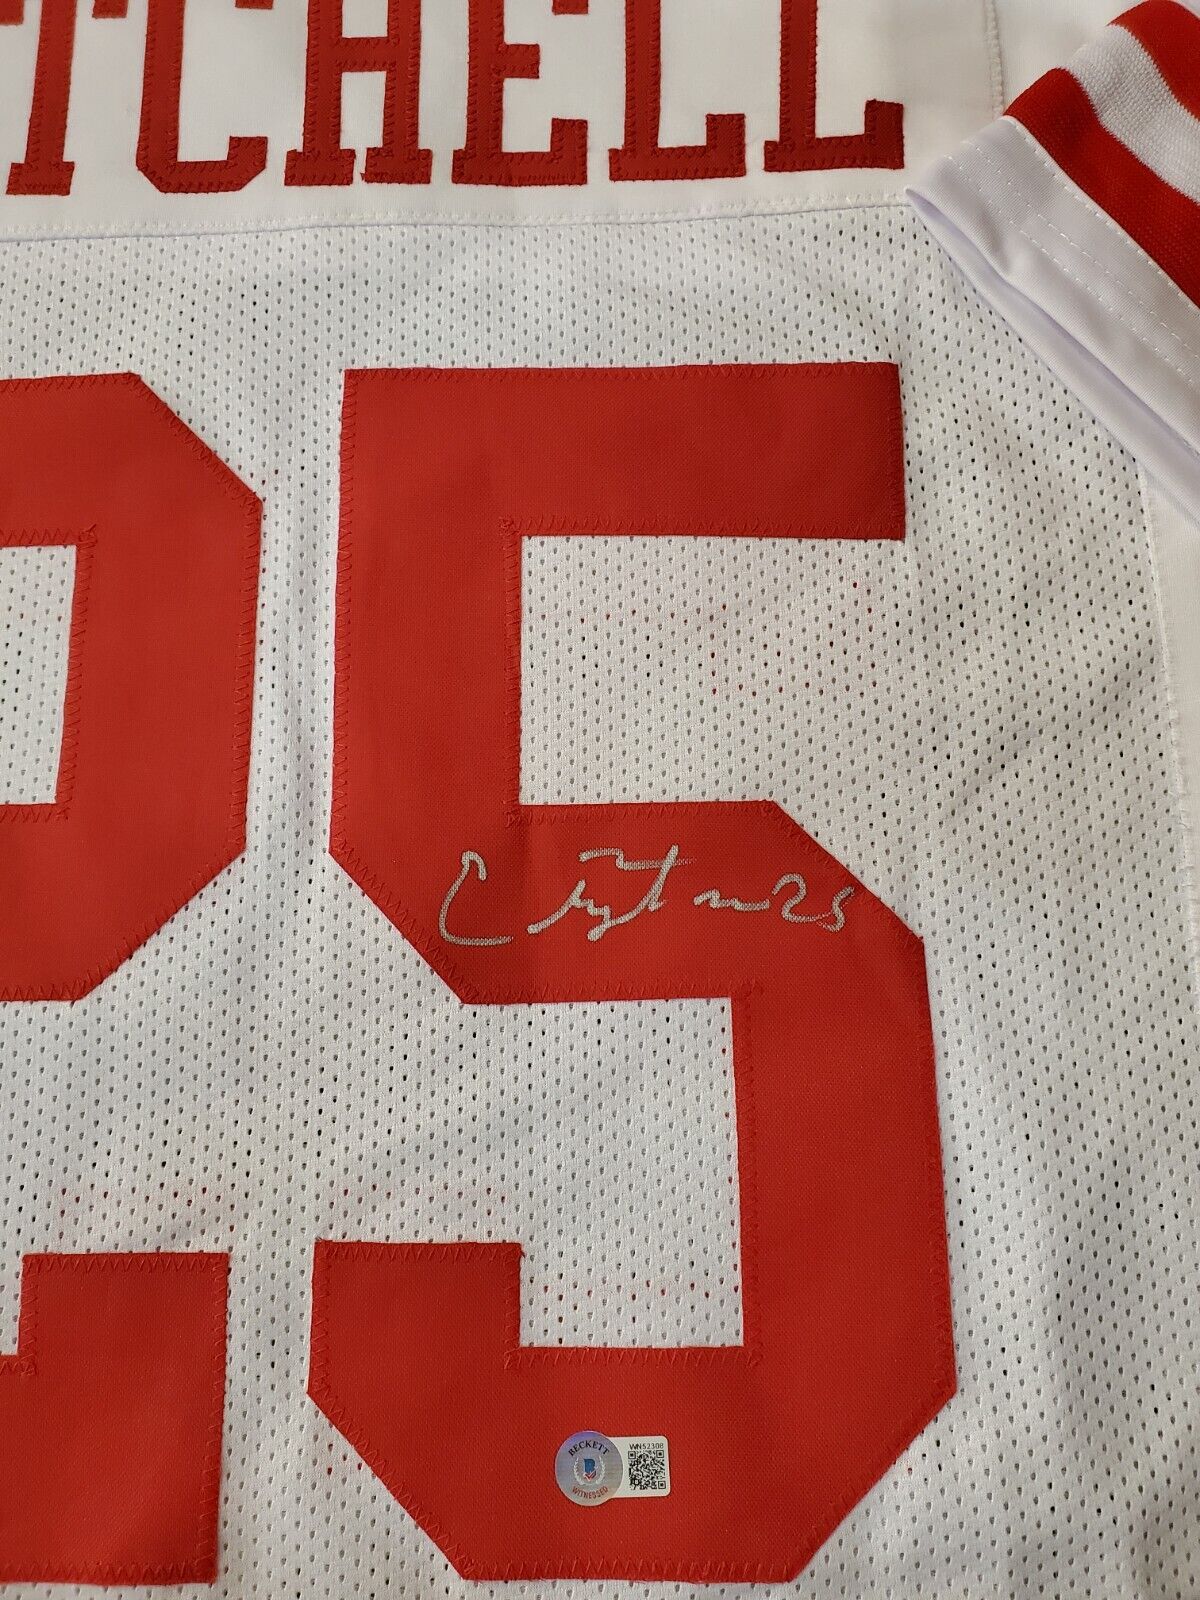 MVP Authentics San Francisco 49Ers Elijah Mitchell Autographed Signed Jersey Beckett Holo 107.10 sports jersey framing , jersey framing